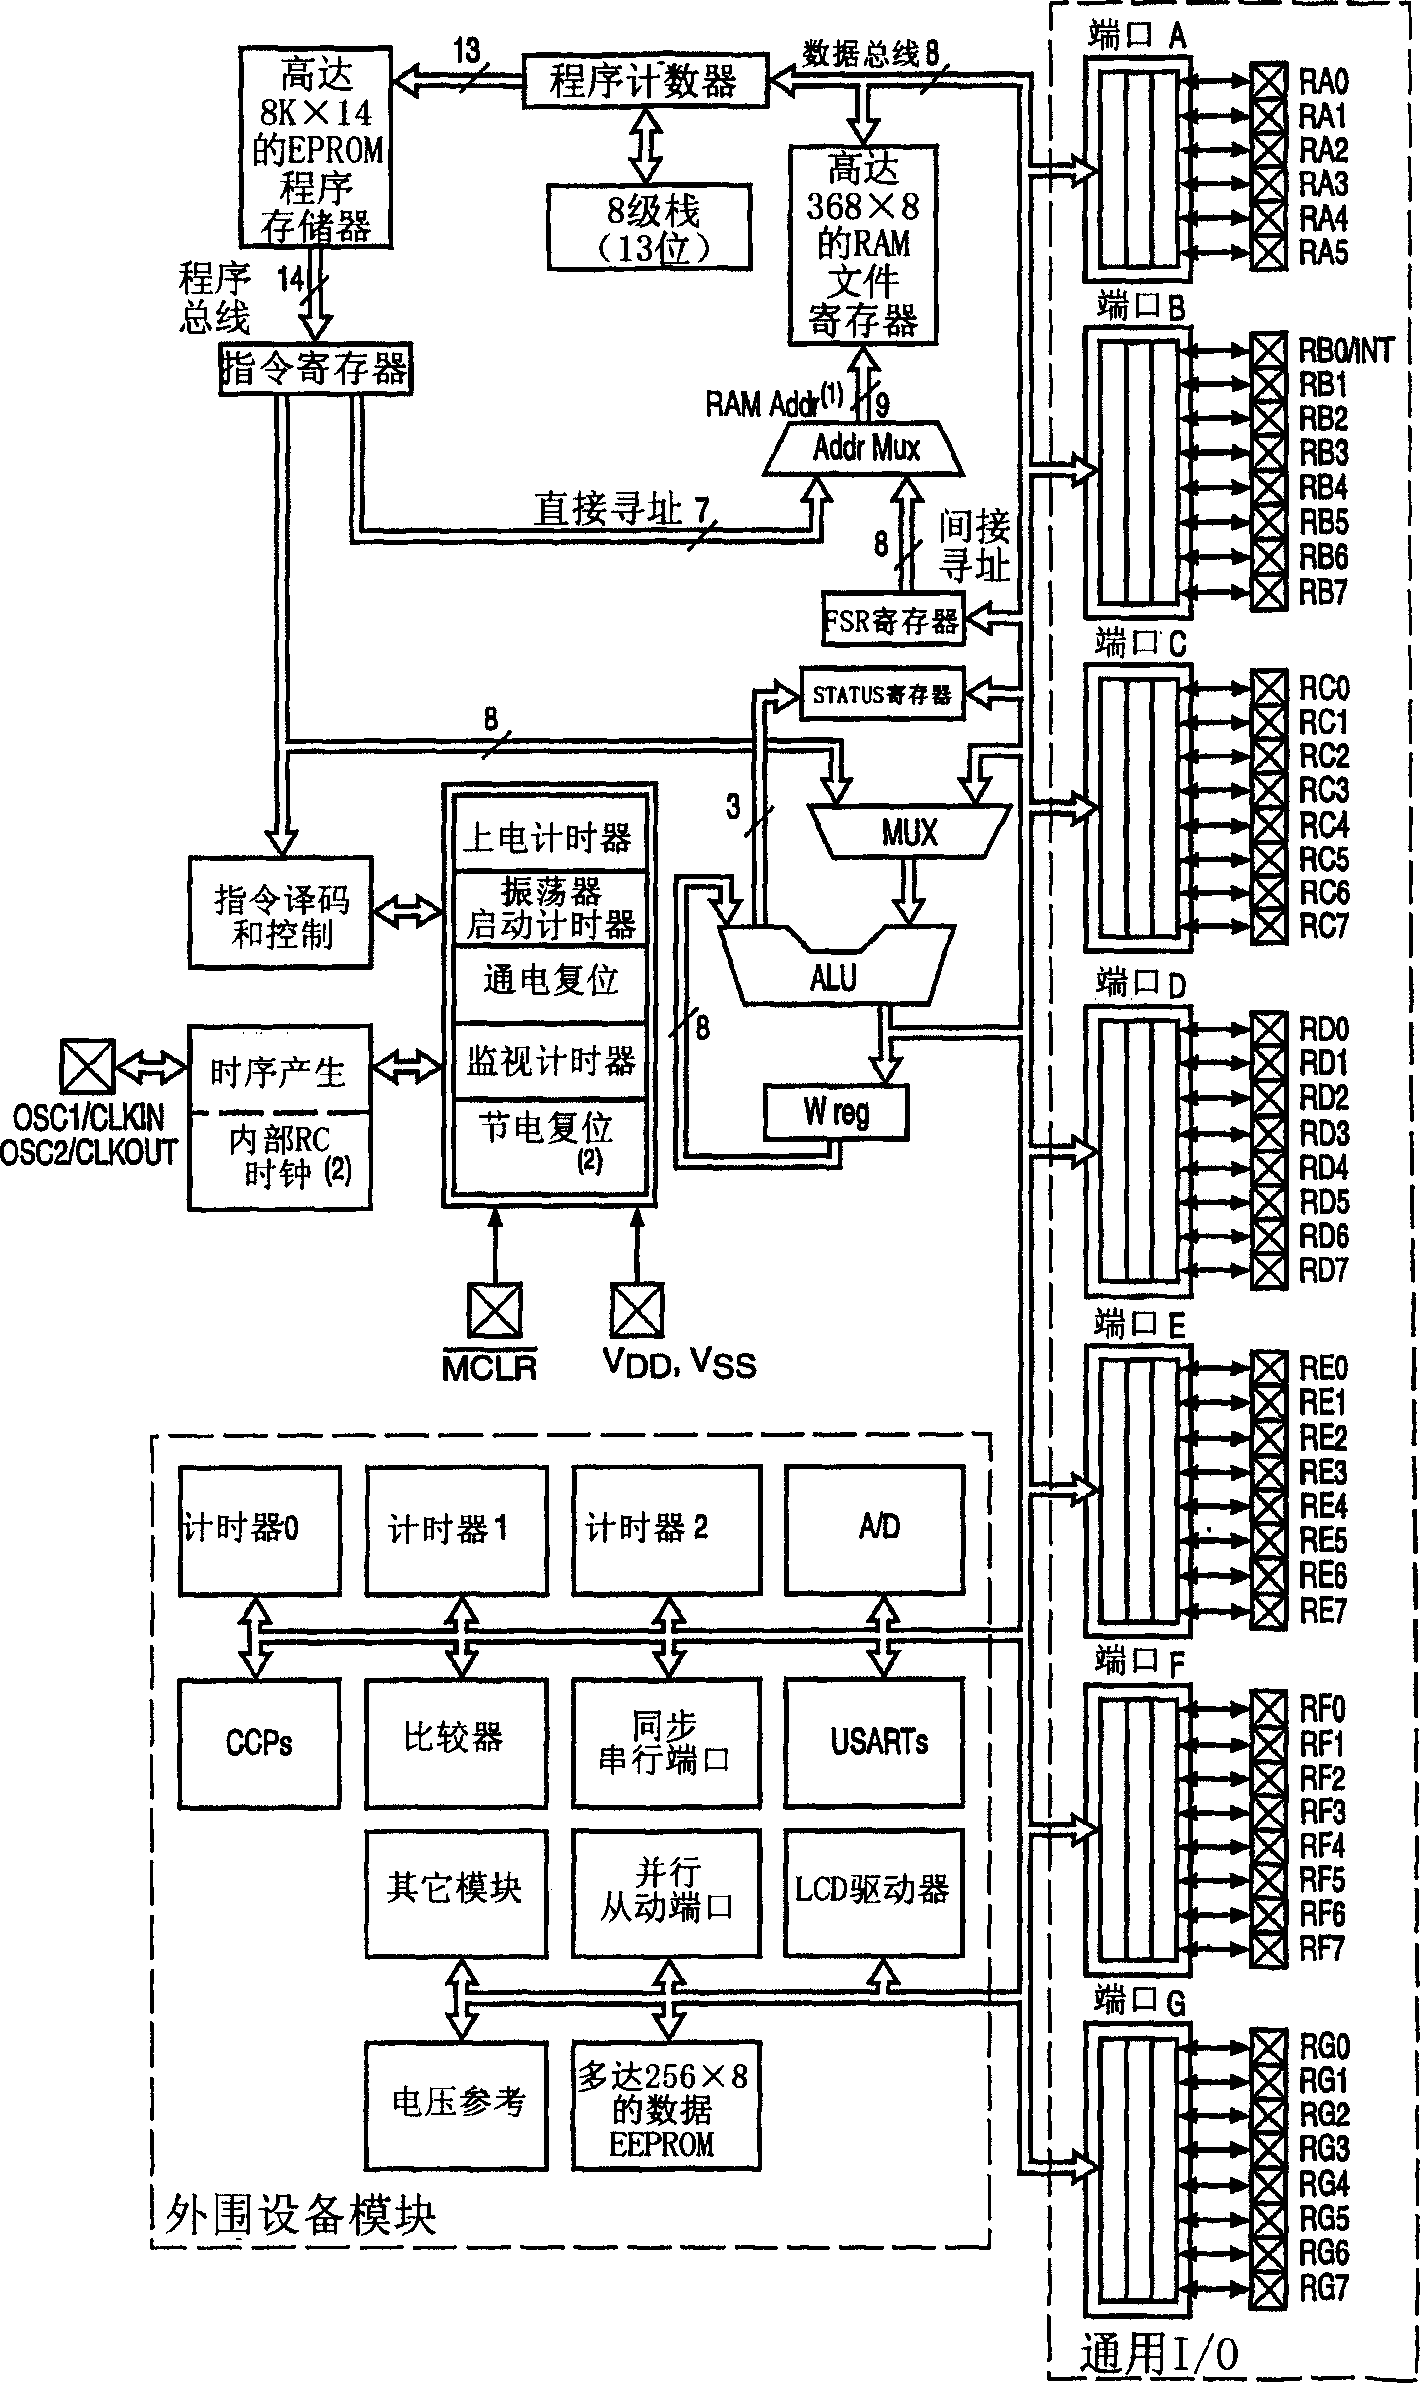 Microcontroller instruction set